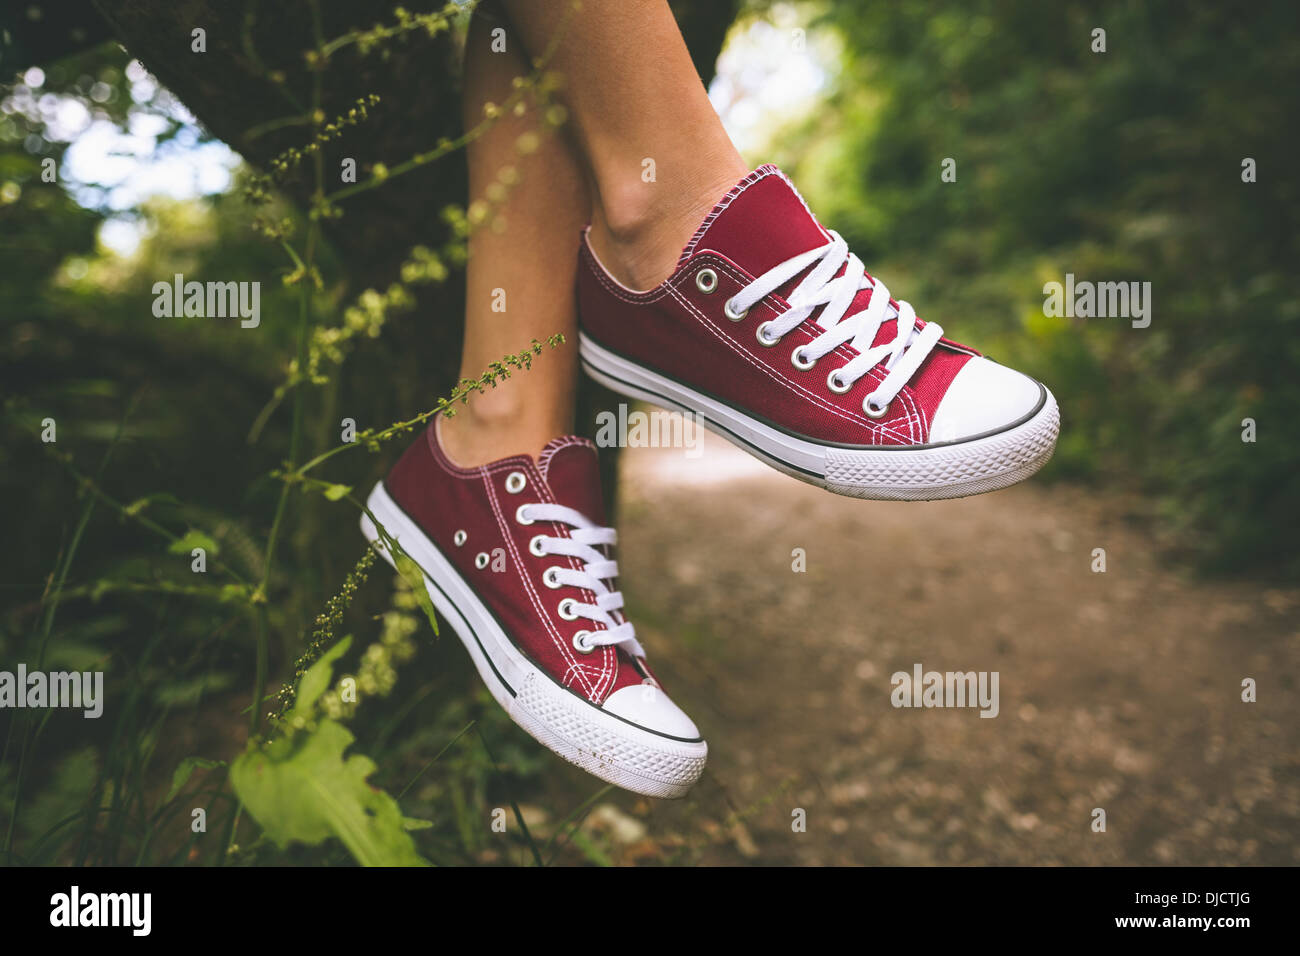 Chiusura del piede femminile di indossare scarpe da ginnastica rosse Foto Stock